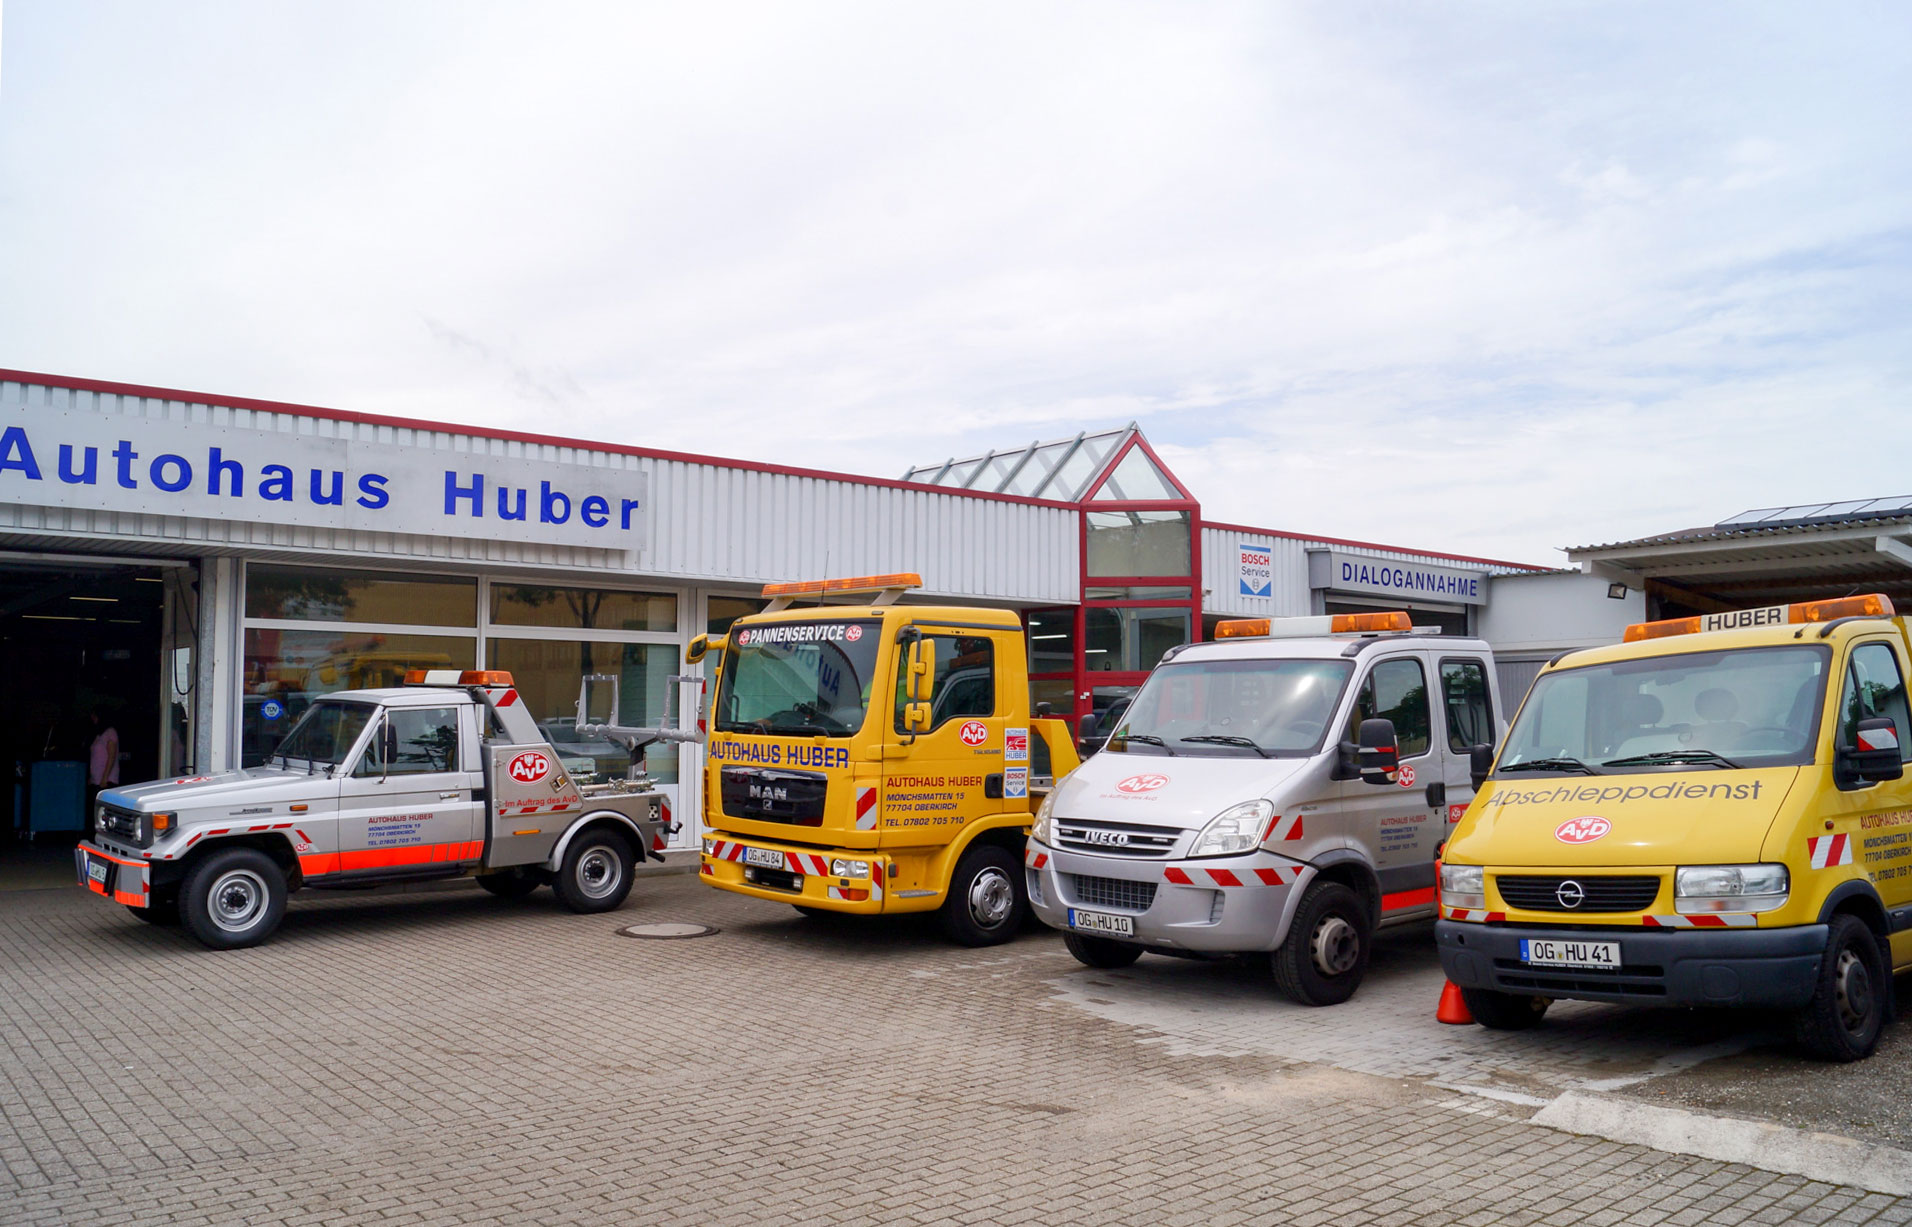 Abschleppflotte Autohaus Huber / Bosch Car Service